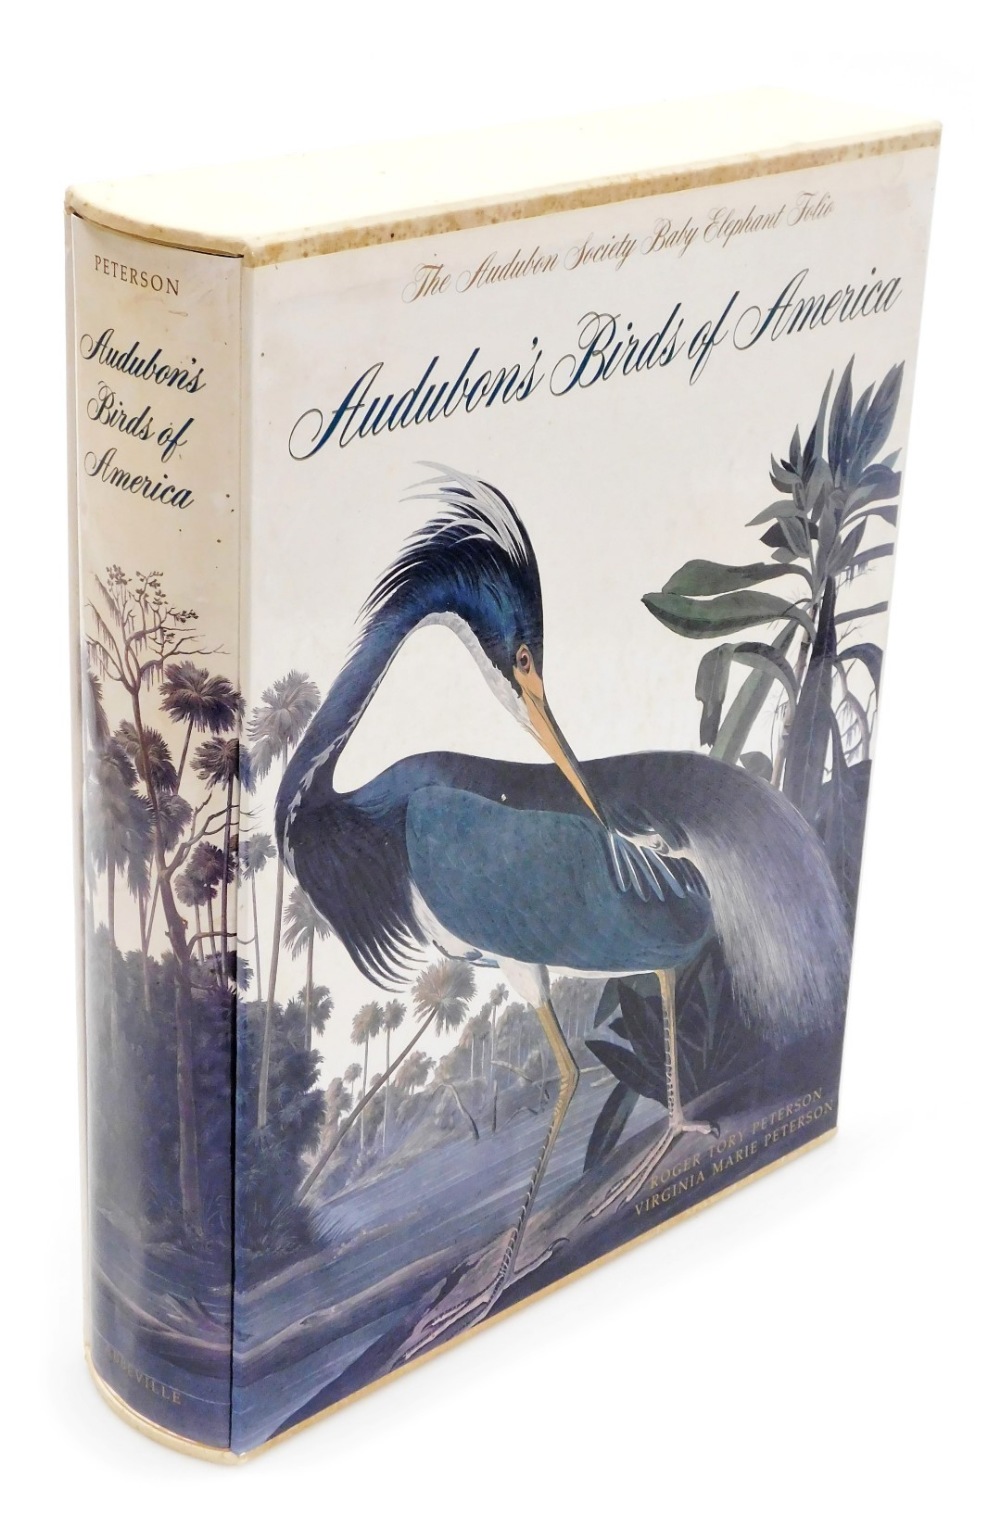 Roger and Virginia Peterson; Audubon's Birds of Americas, the Audubon's Society Baby Elephant folio,